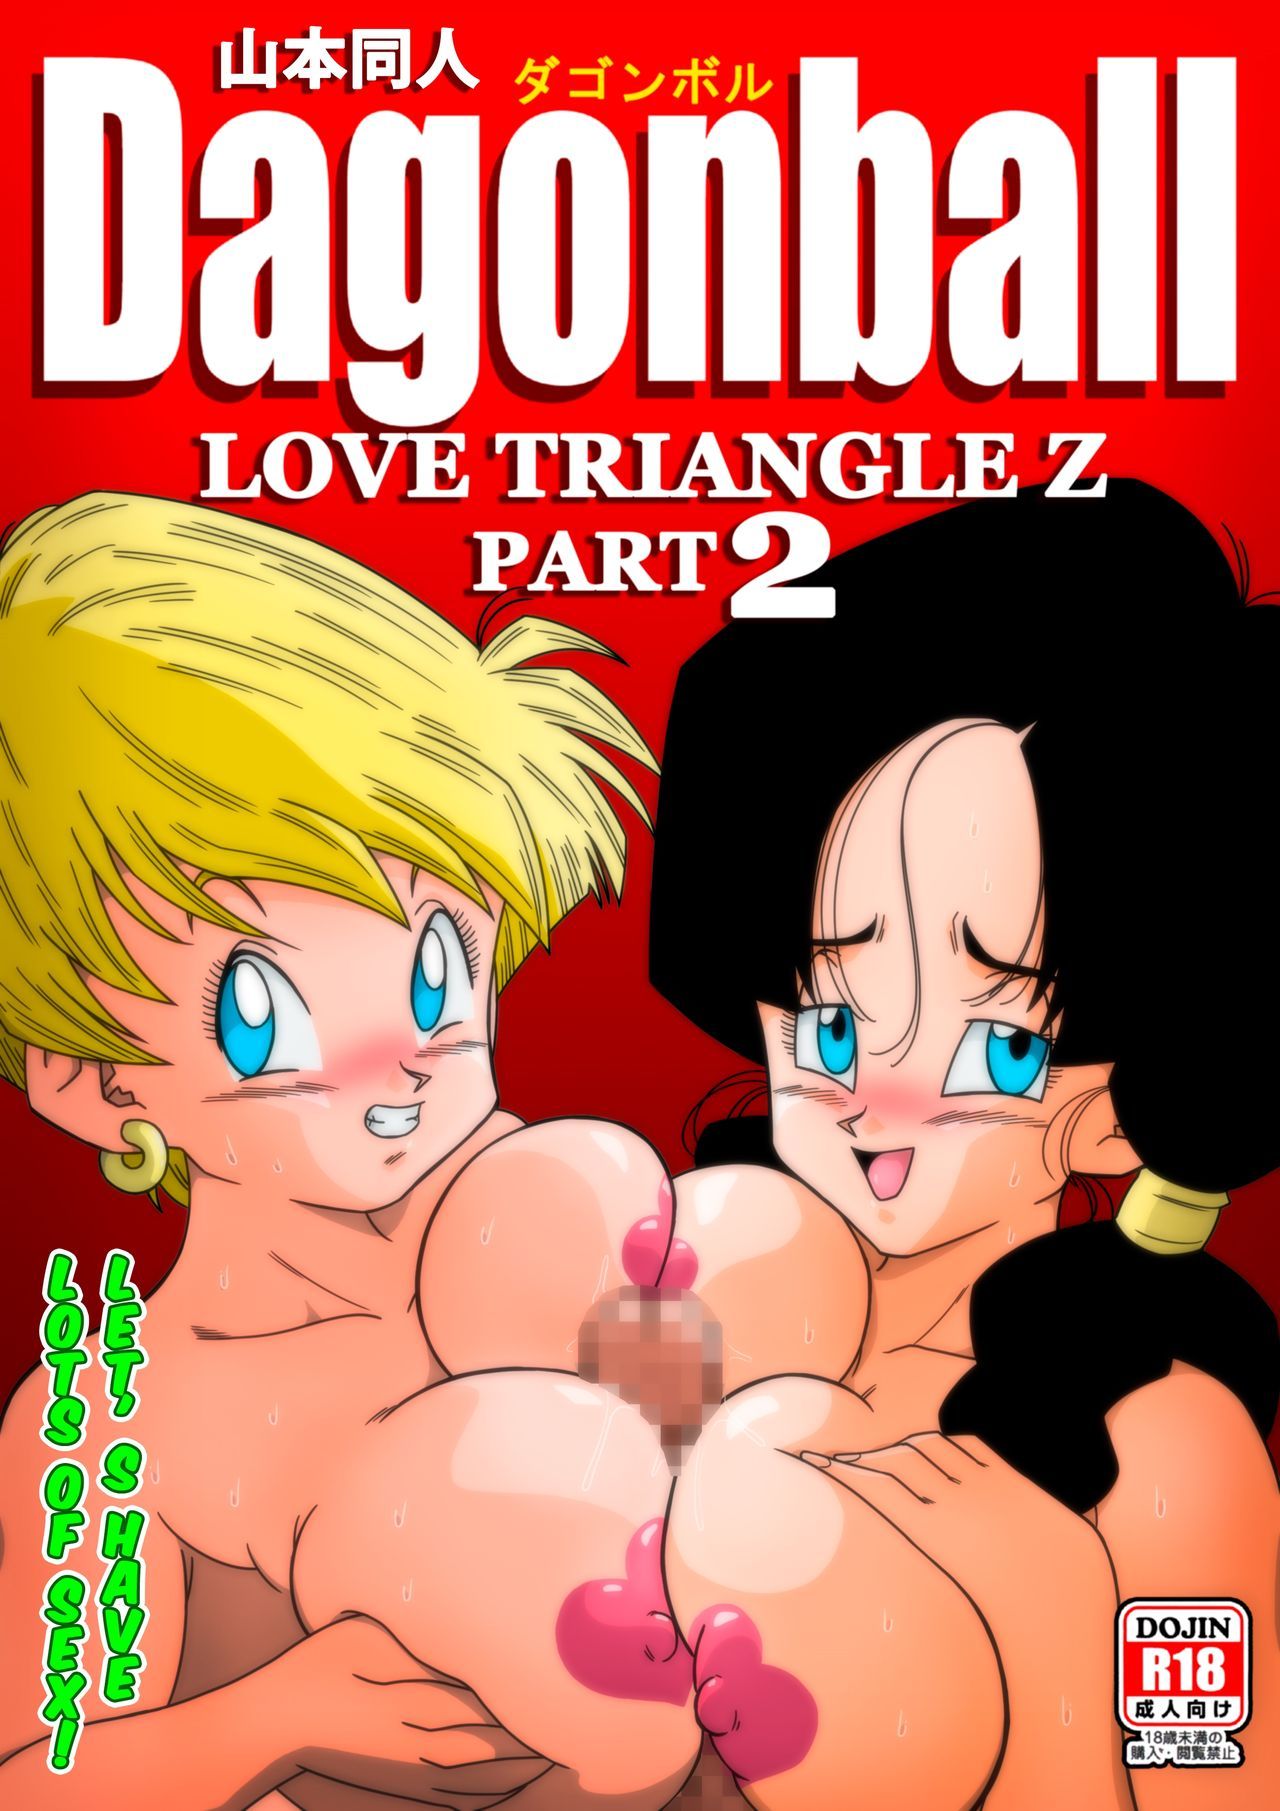 Dragon Ball Z 02: Vamos fazer sexo juntas? - Foto 1